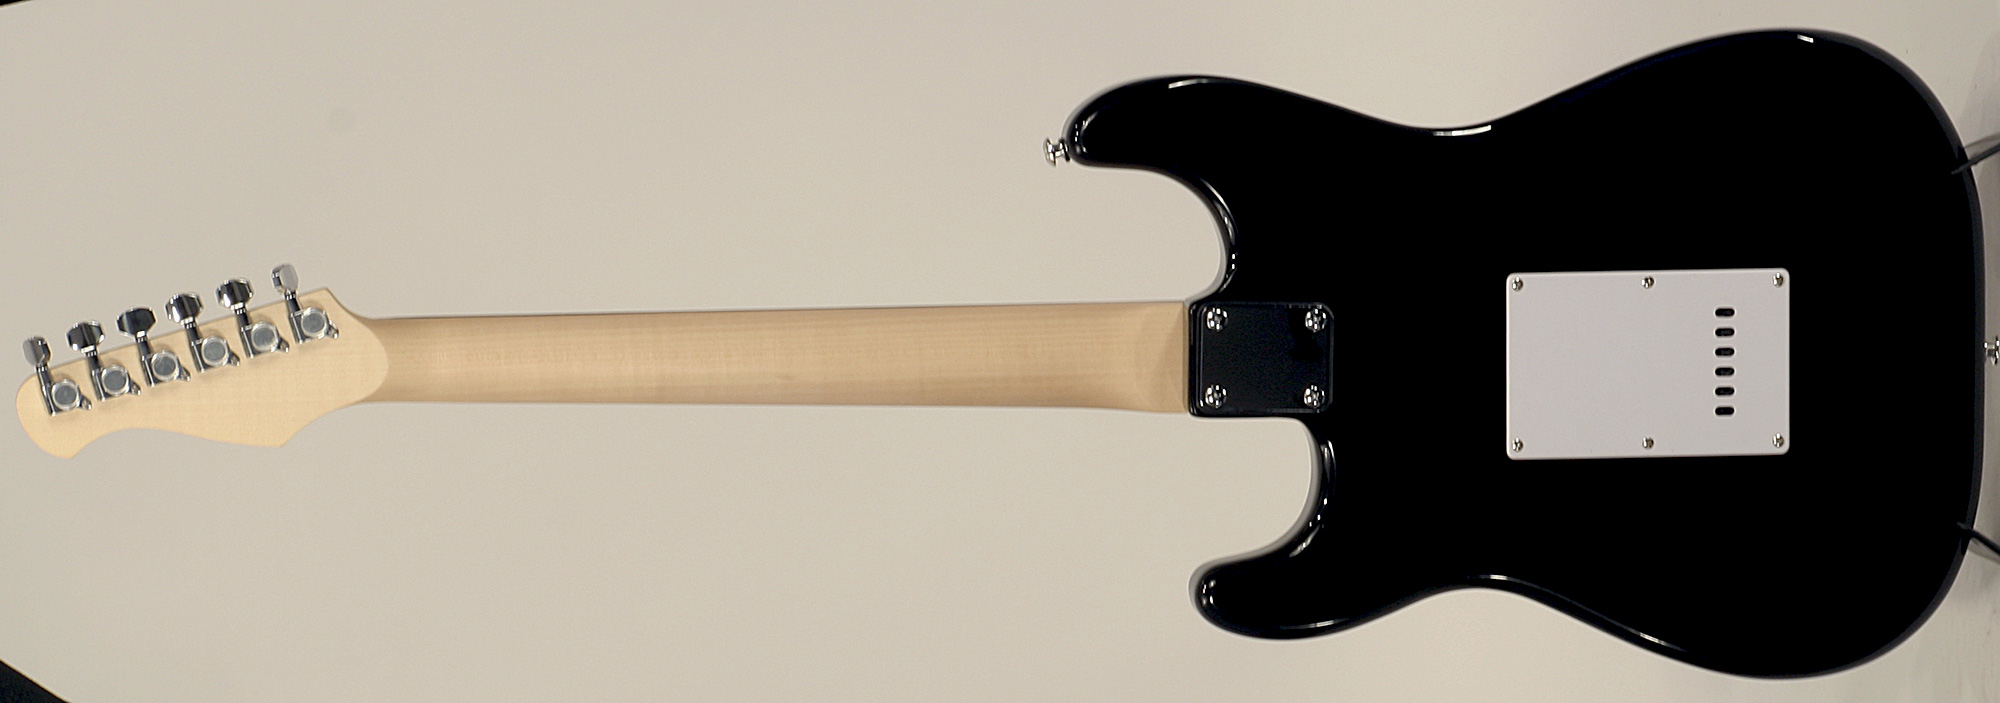 Eastone Str70-blk 3s Pur - Black - Elektrische gitaar in Str-vorm - Variation 2